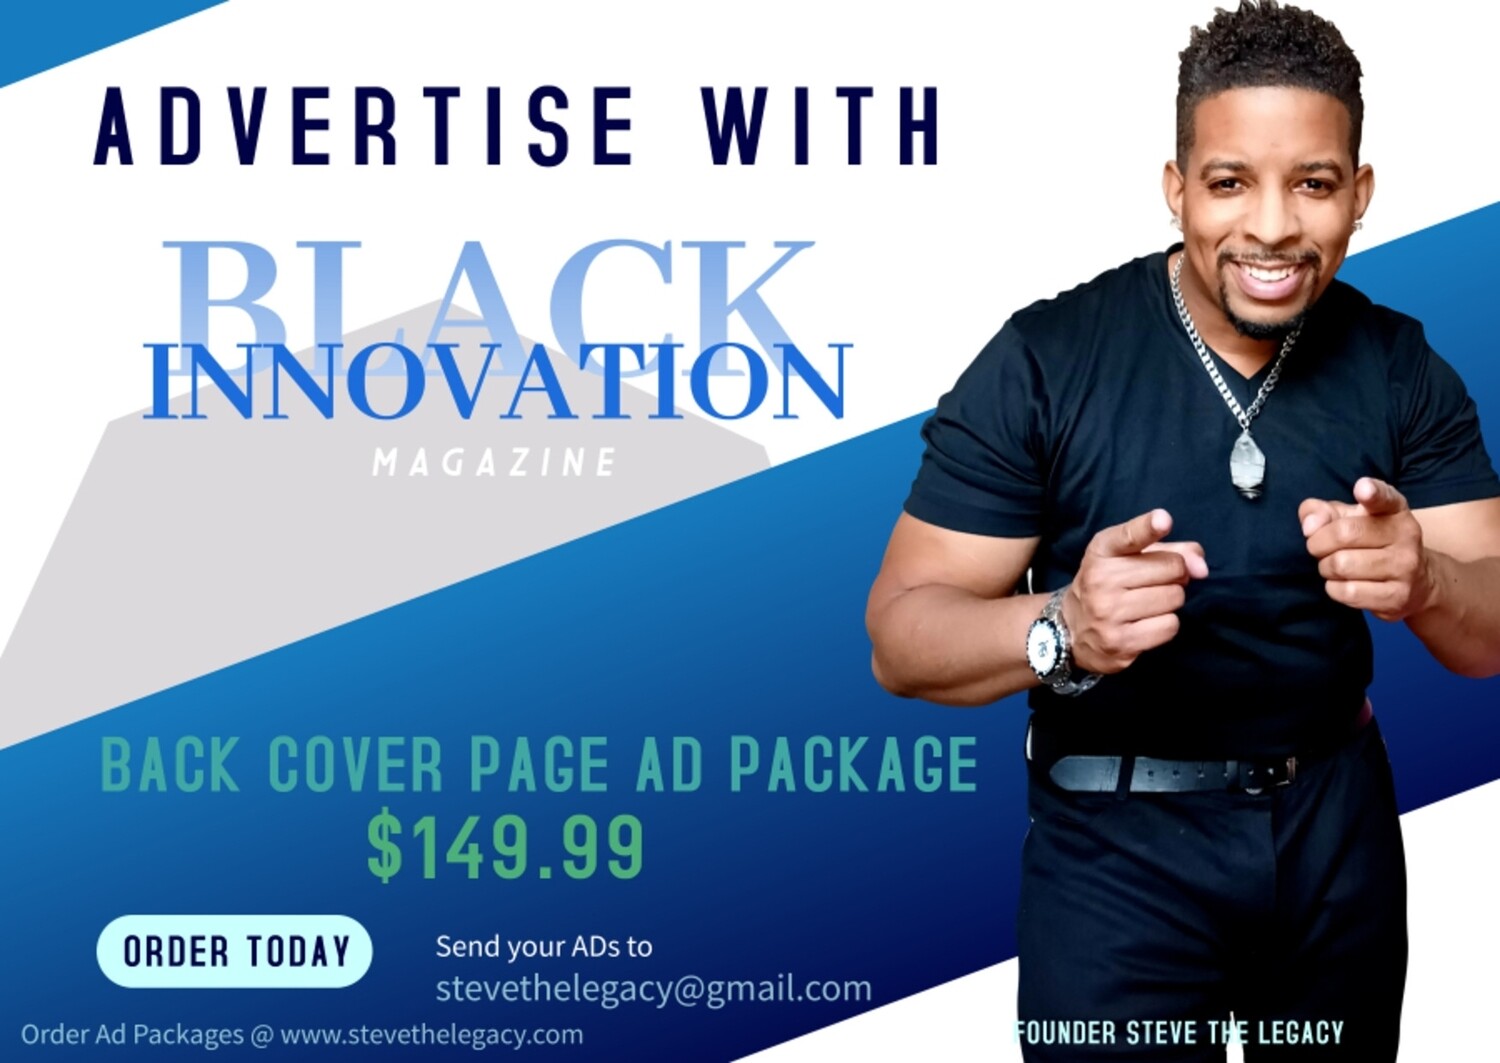 BACK COVER AD FOR BLACK INNOVATION MAGAZINE 